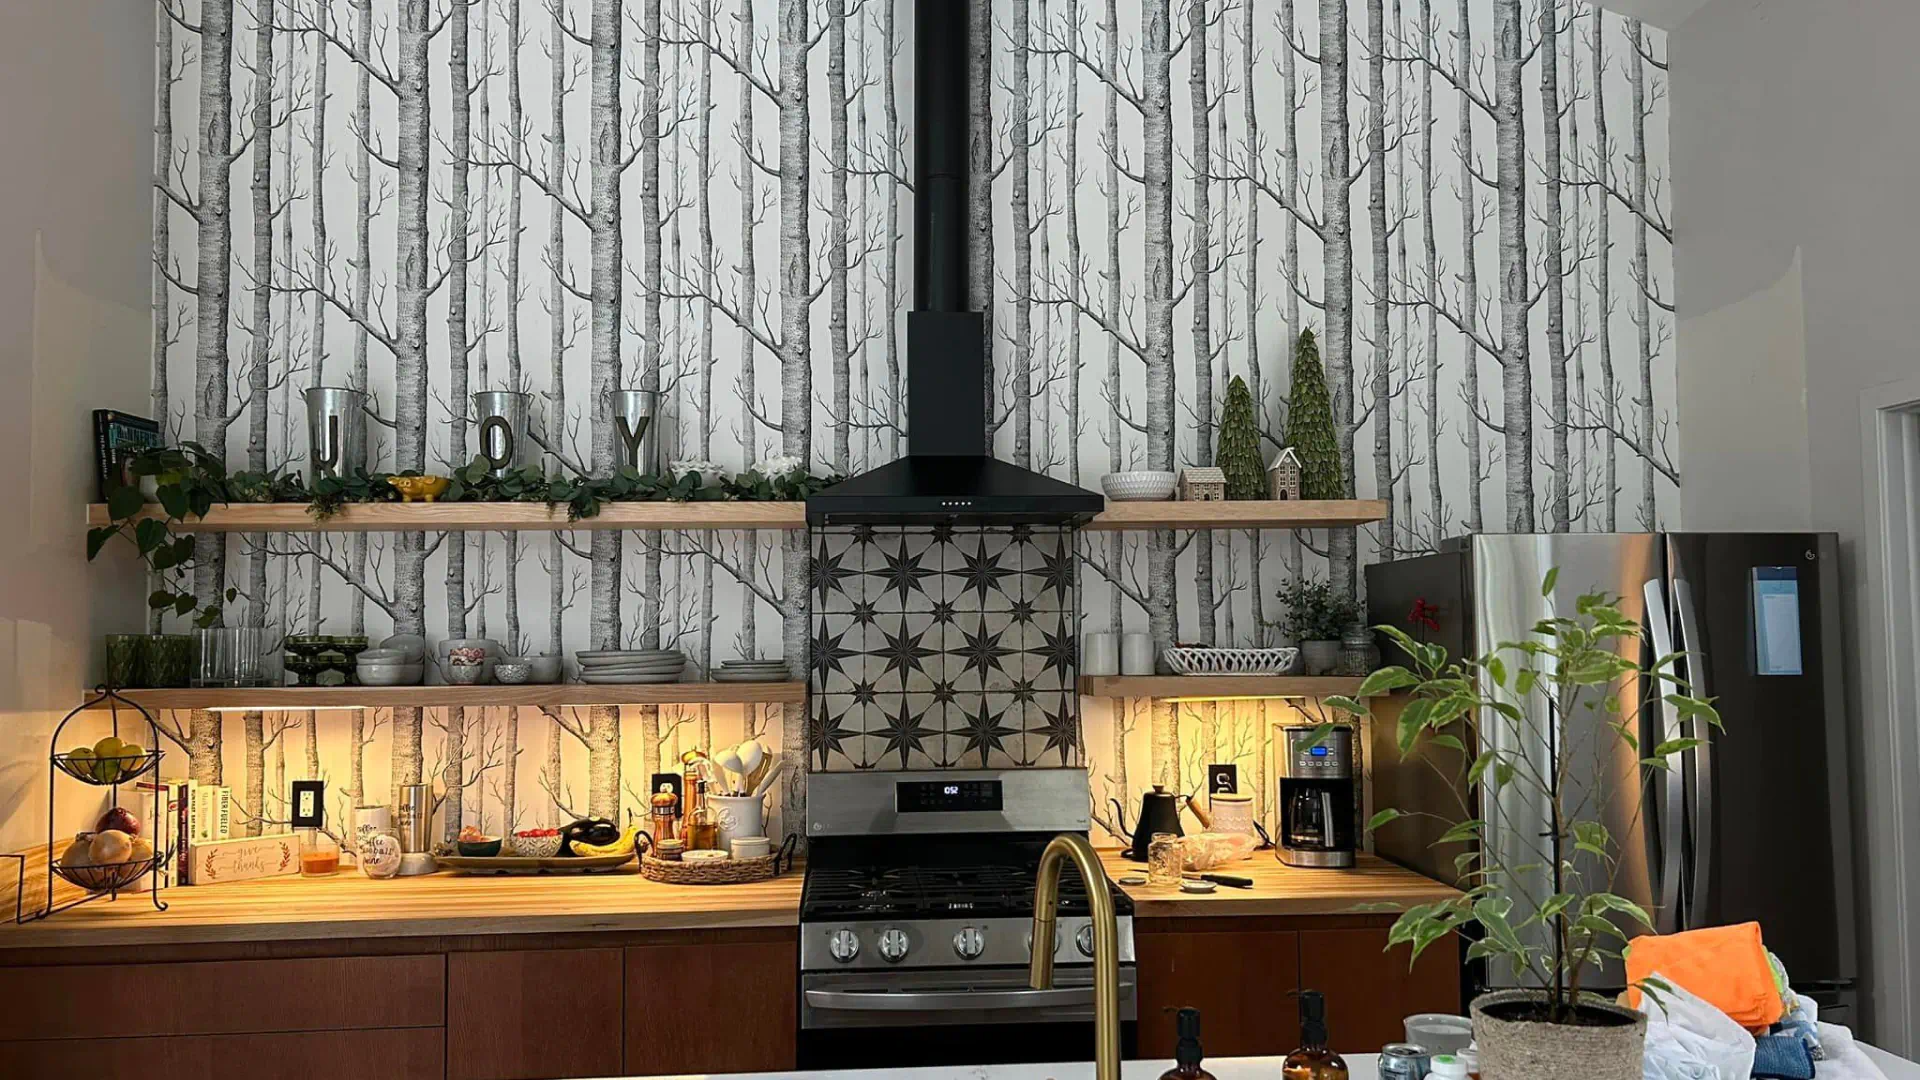 modern kitchen remodel with forest themed backsplash